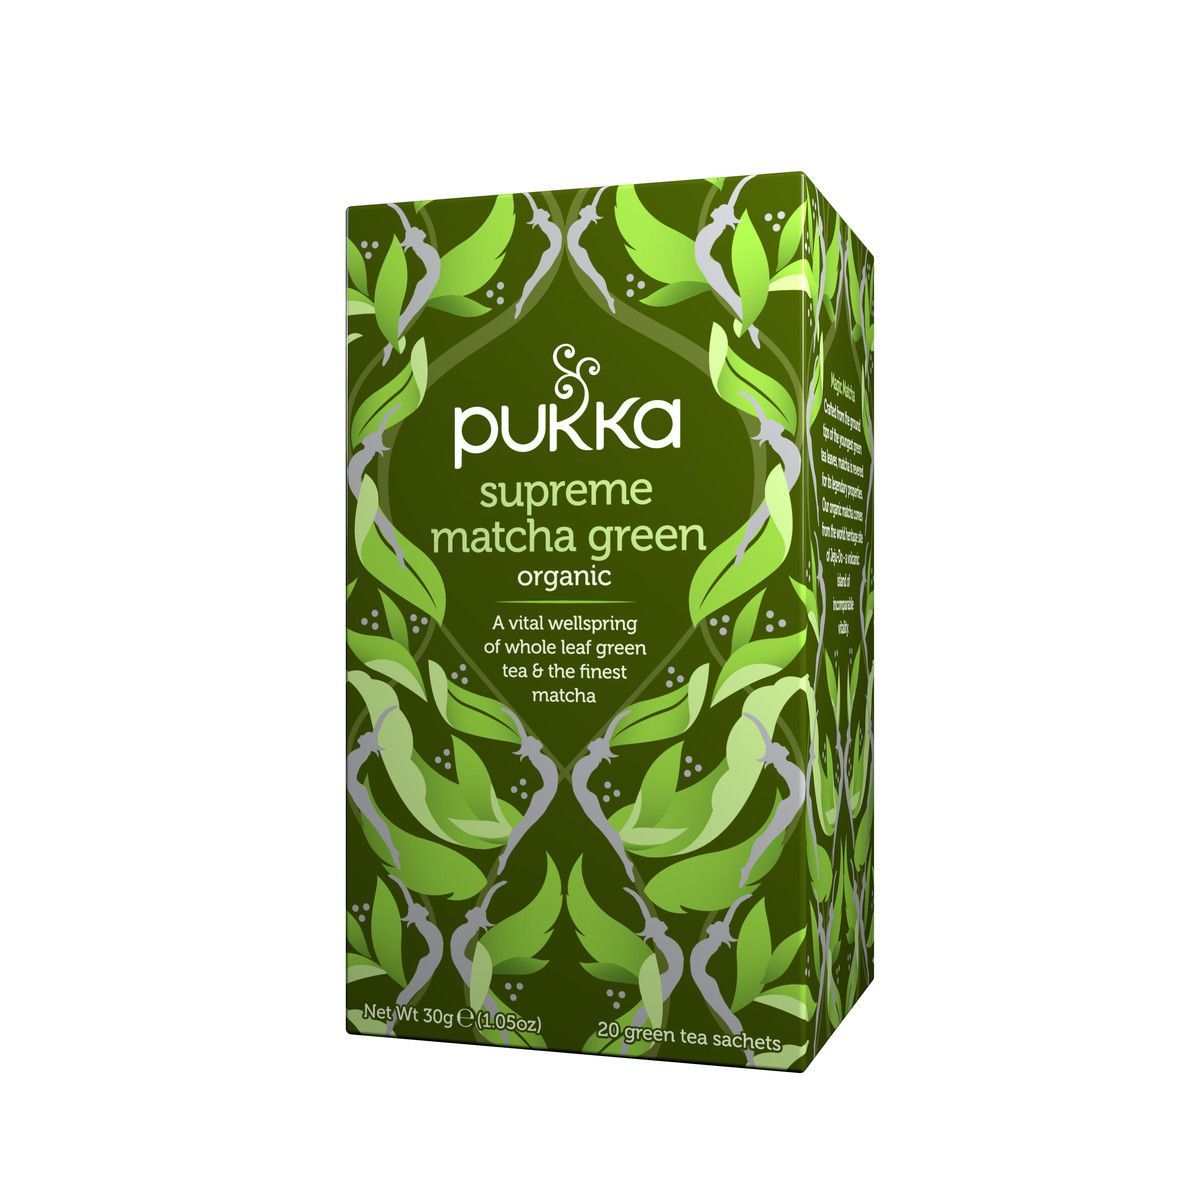 Pukka Supreme Matcha Green Organic Tea Bags - 20ct | Target